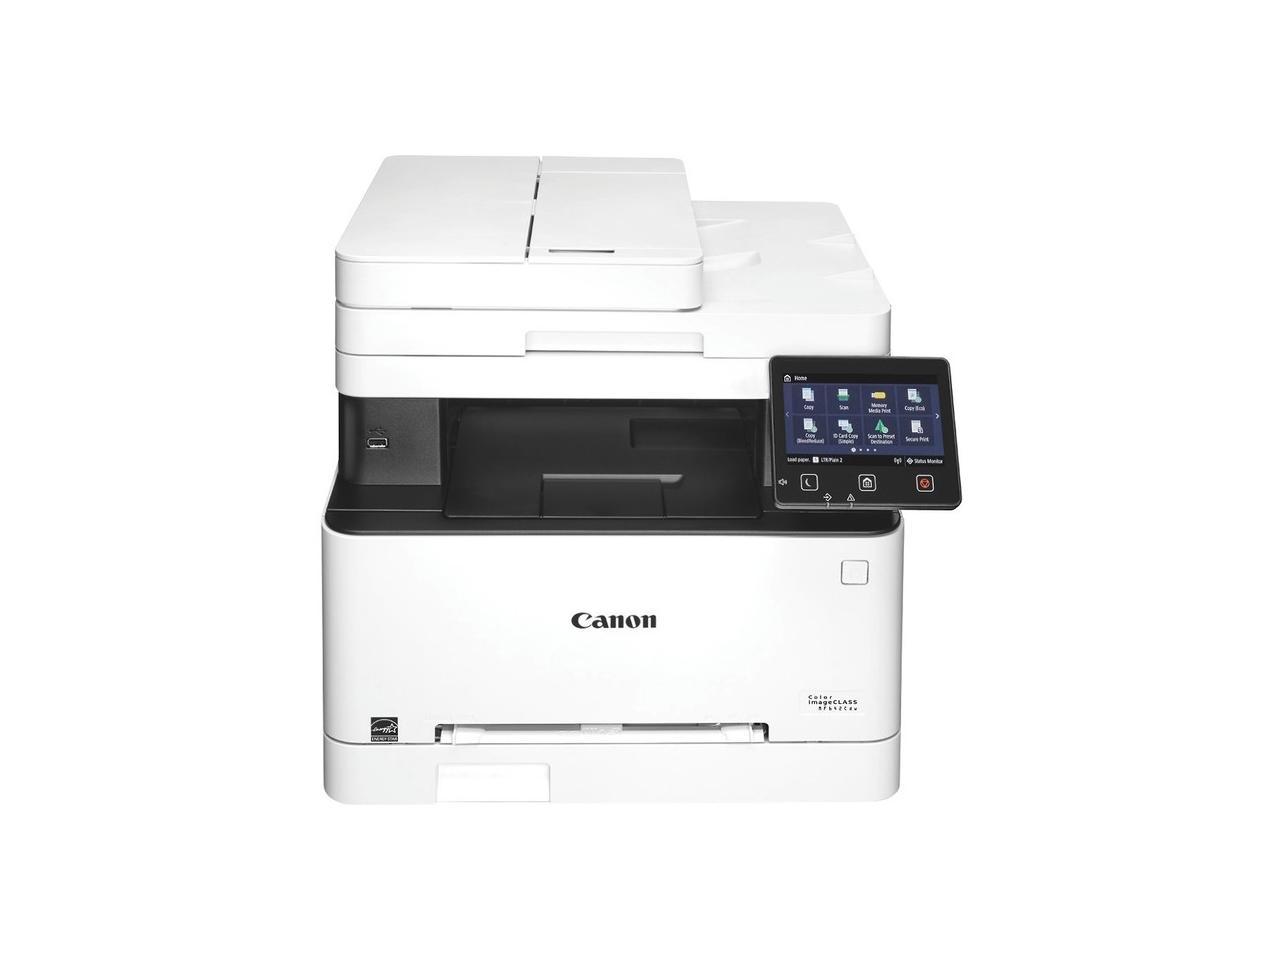 Canon - imageCLASS MF642Cdw Wireless Color All-In-One Printer - White